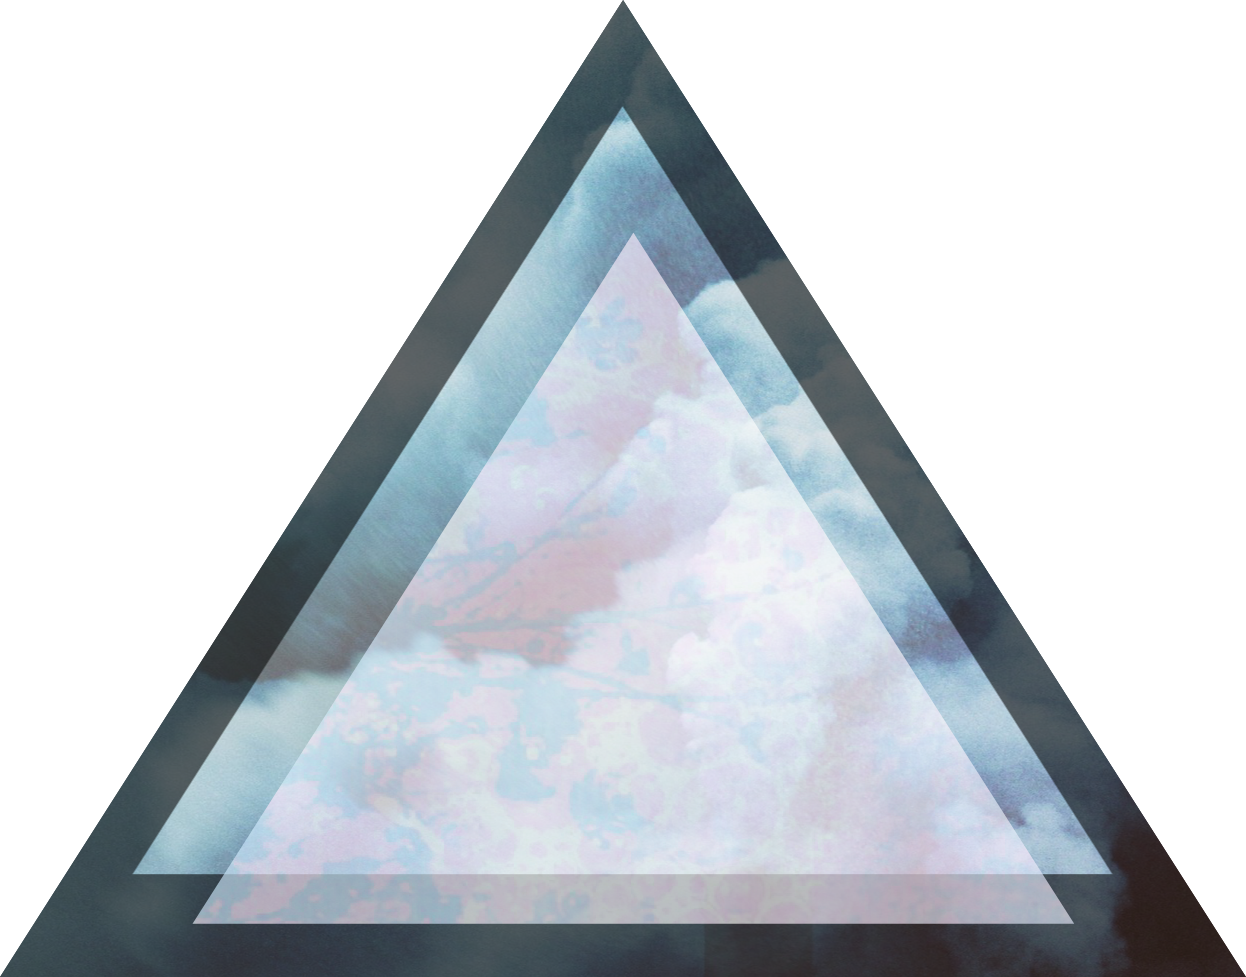 Abstract Triangular Overlay